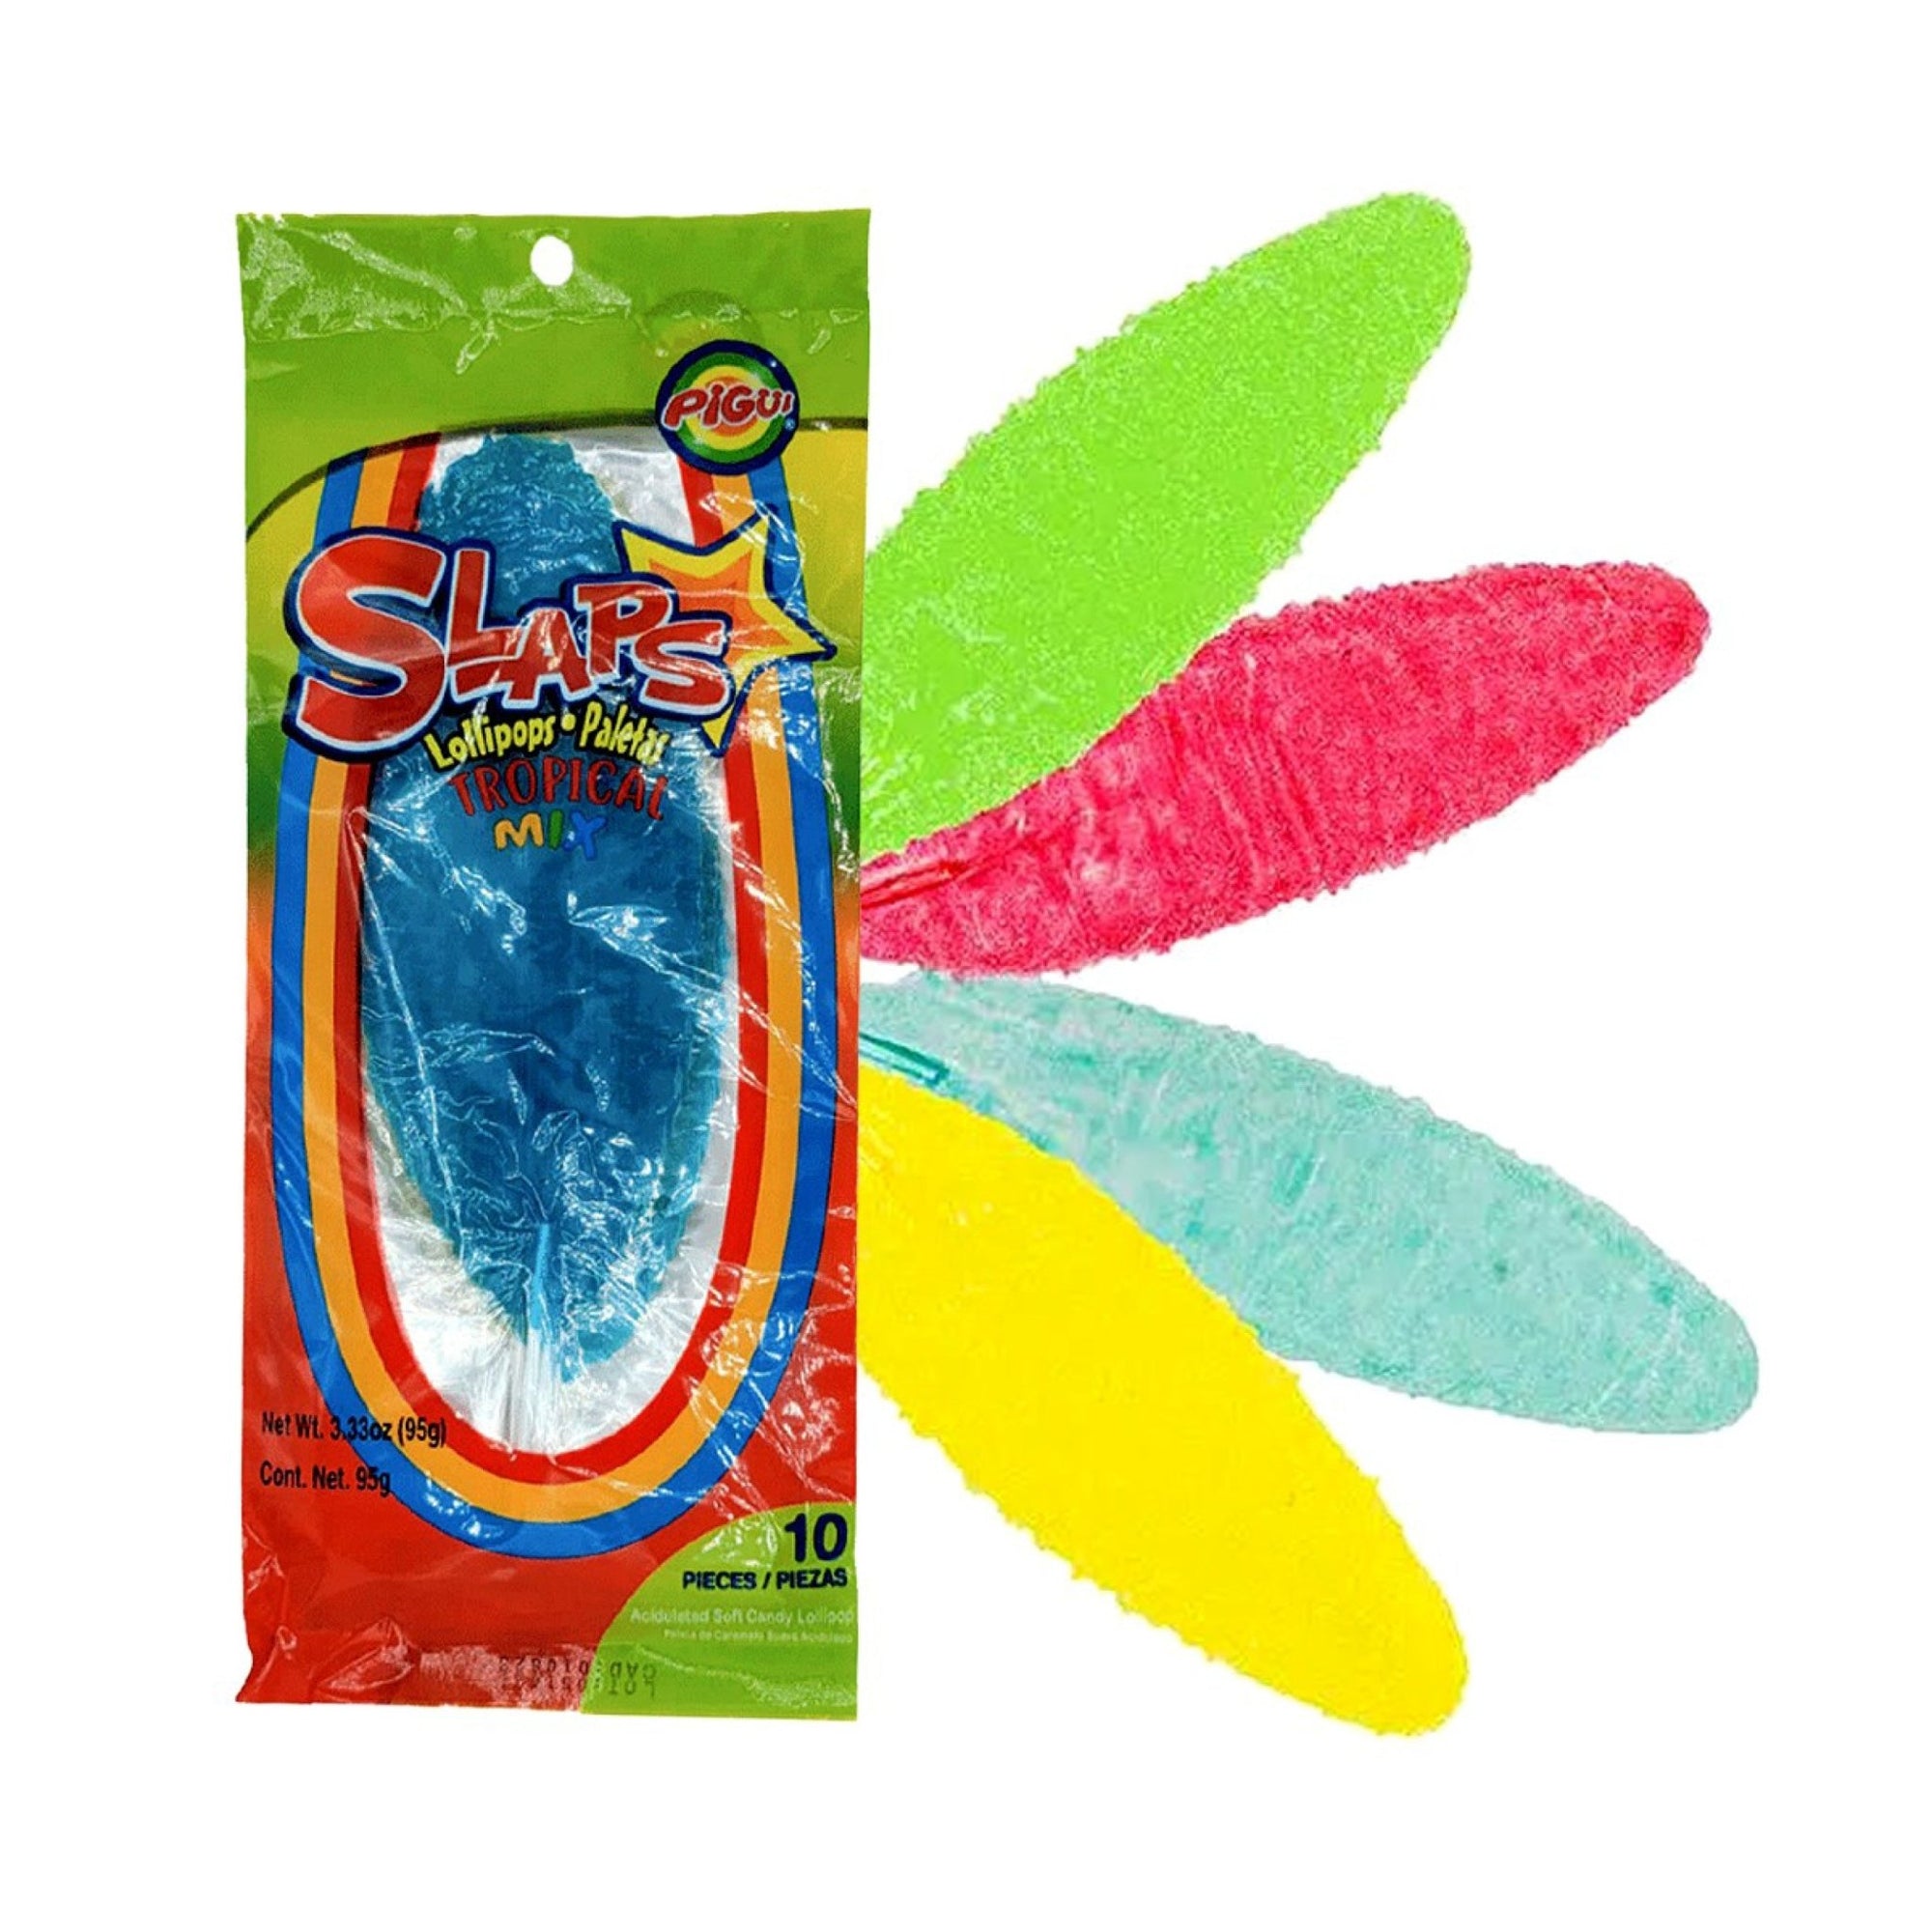 Pigui Mix Slaps 95 g - Fast Candy